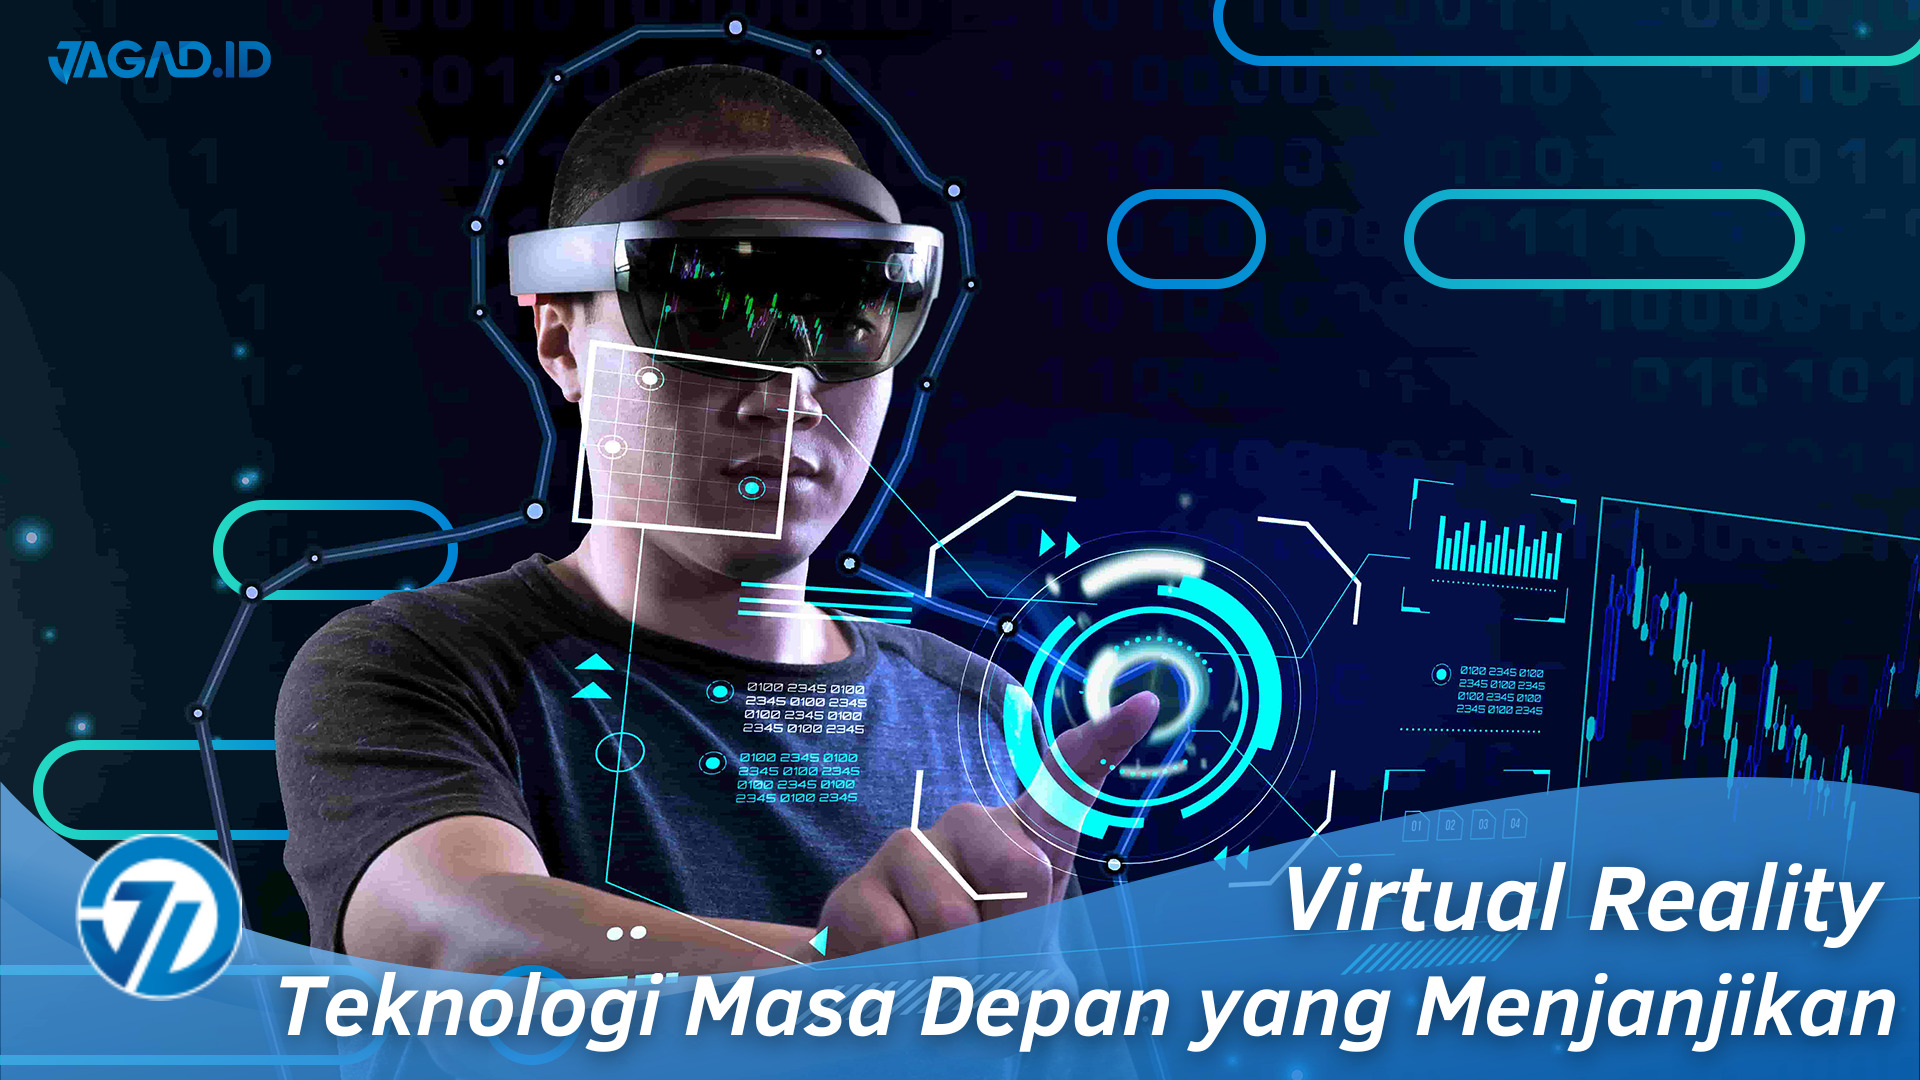 Virtual Reality adalah